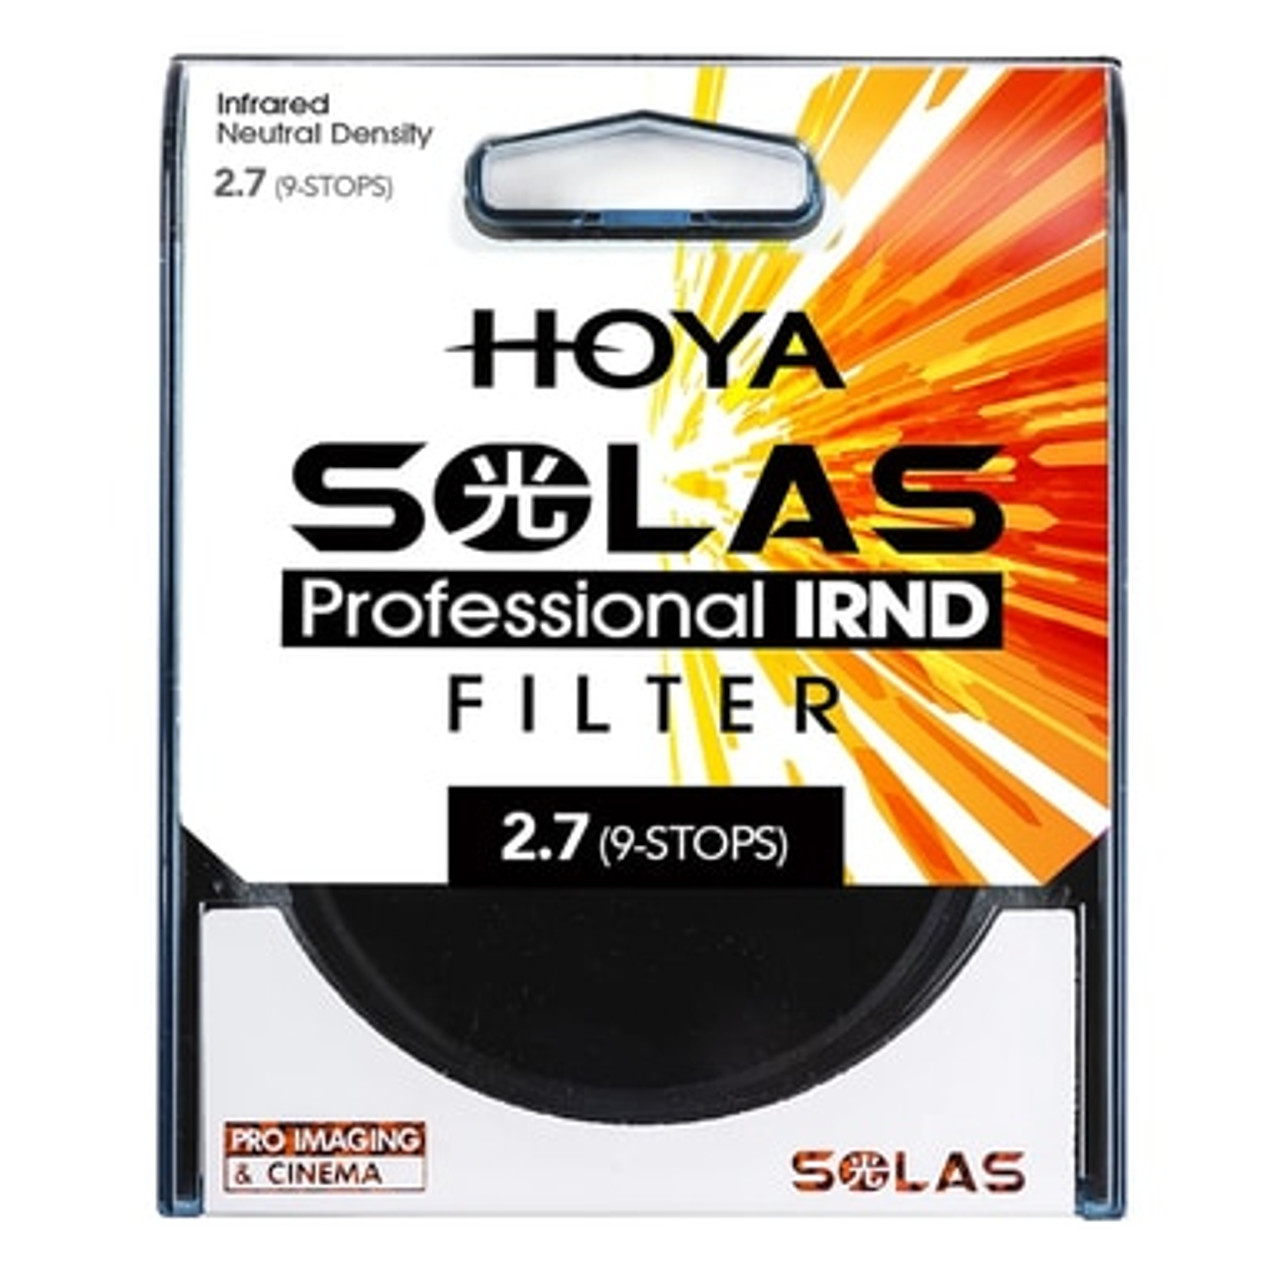 HOYA SOLAS IRND 2.7 (9-STOP) (58MM)